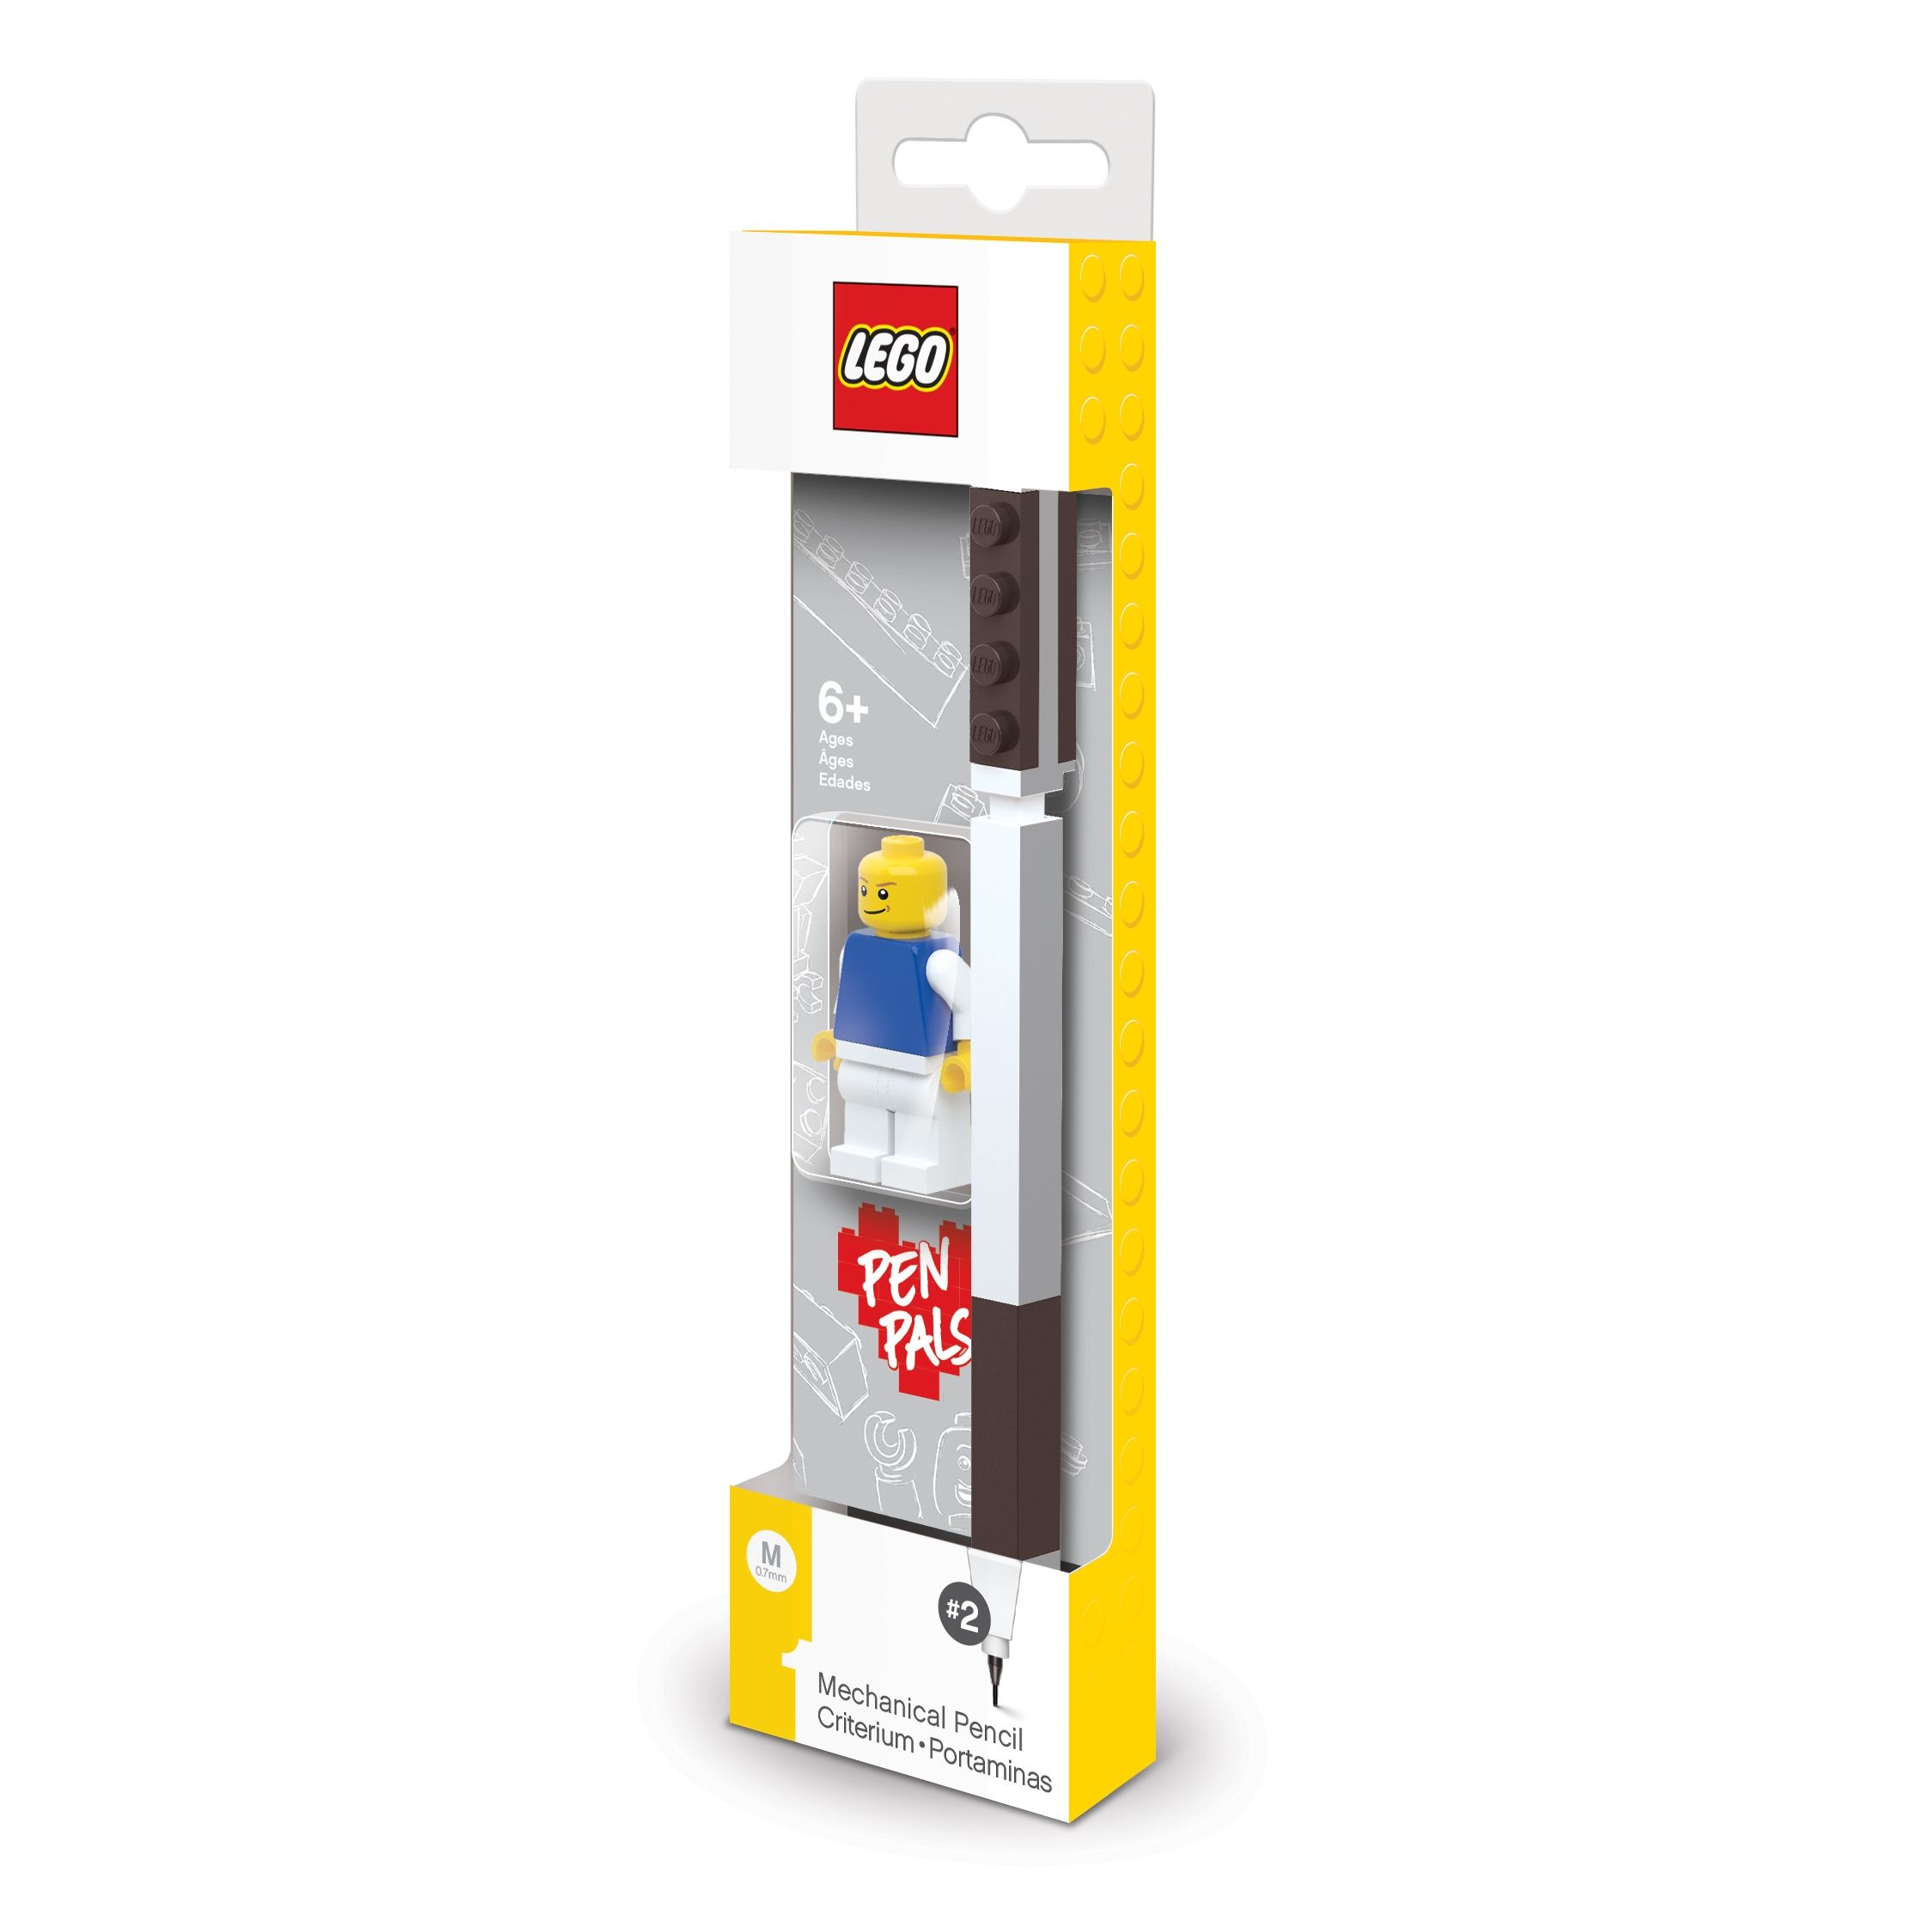 LEGO Gear 5006294 2.0 Mechanical Pencil with mini figure LEGO_5006294_alt1.jpg